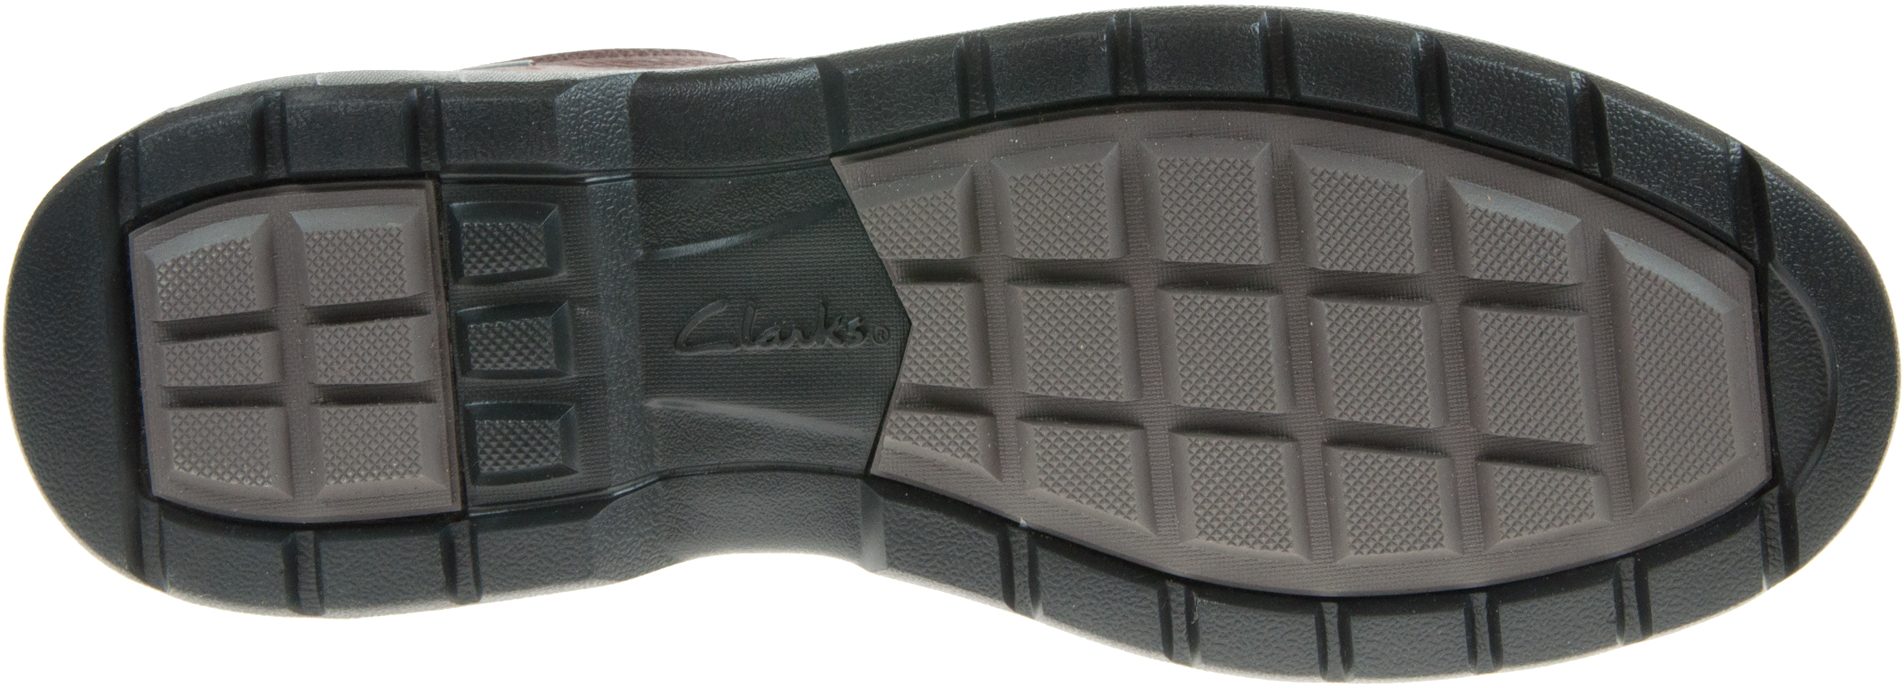 Clarks Rockie Walk Gore-Tex Dark Tan Leather 26173465 - Casual Shoes ...